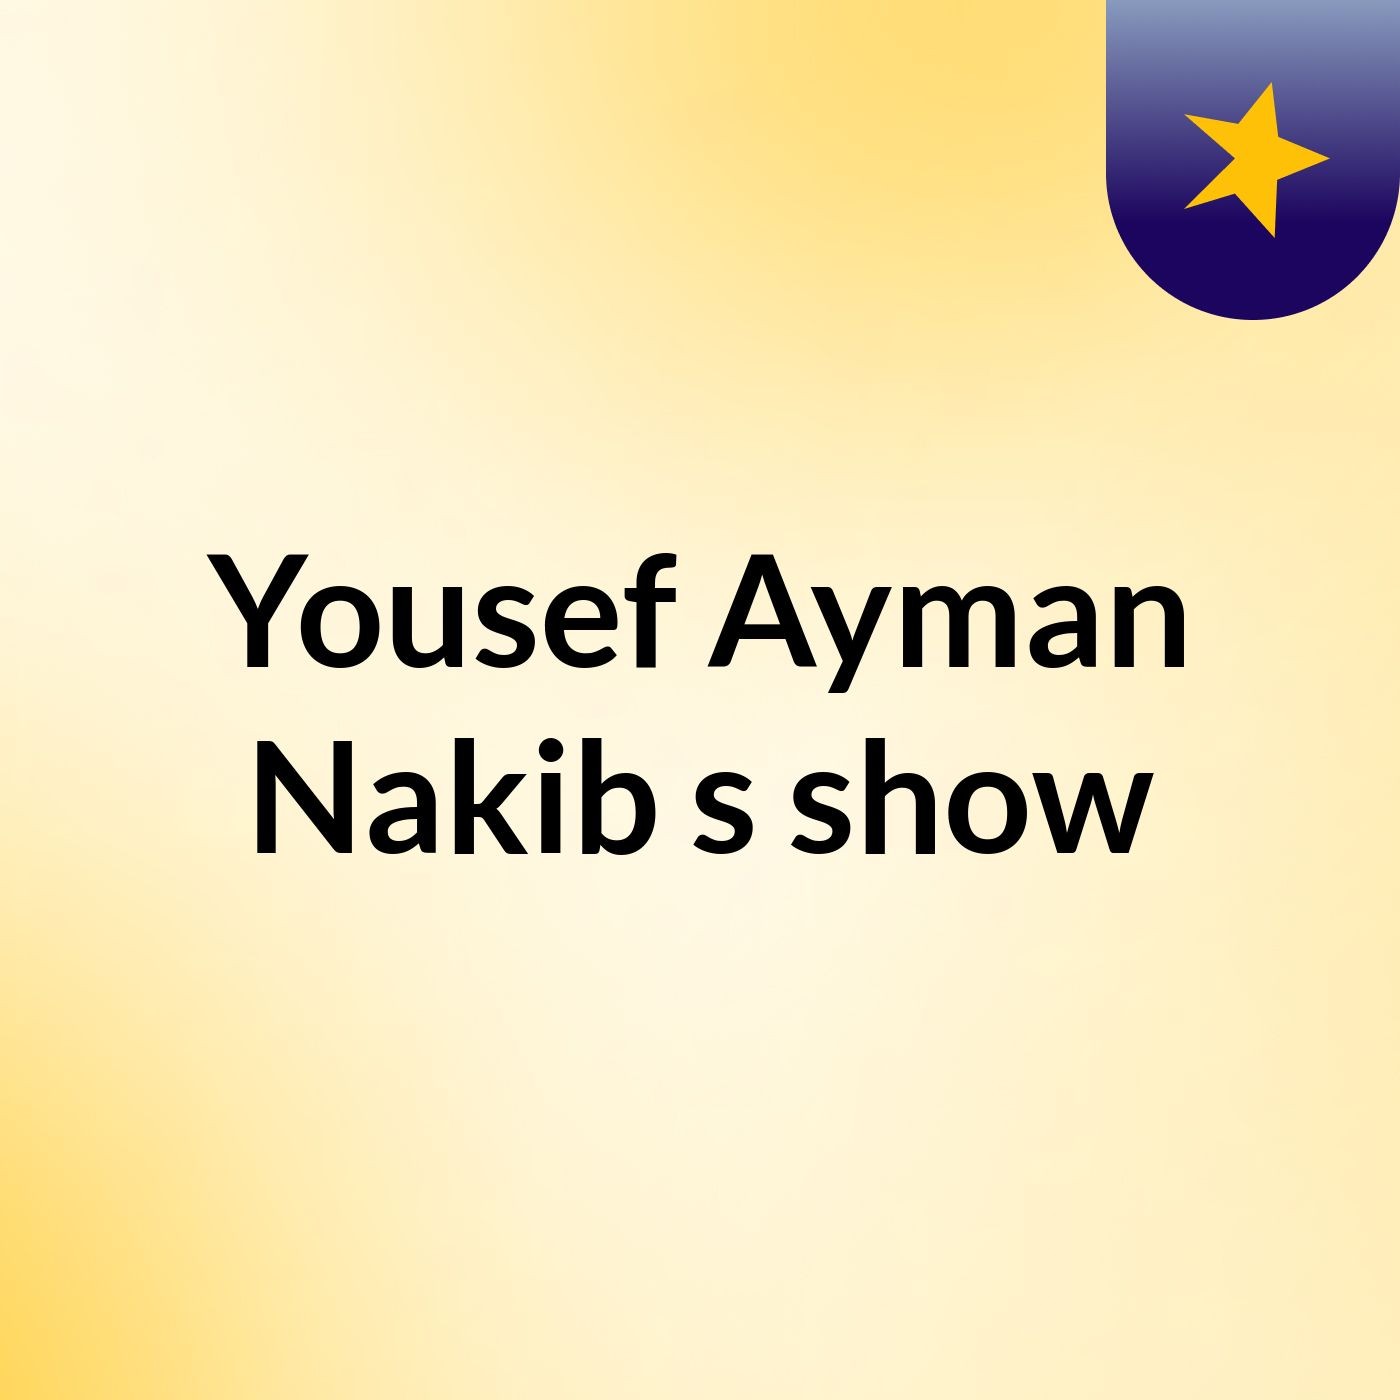 Yousef Ayman Nakib's show